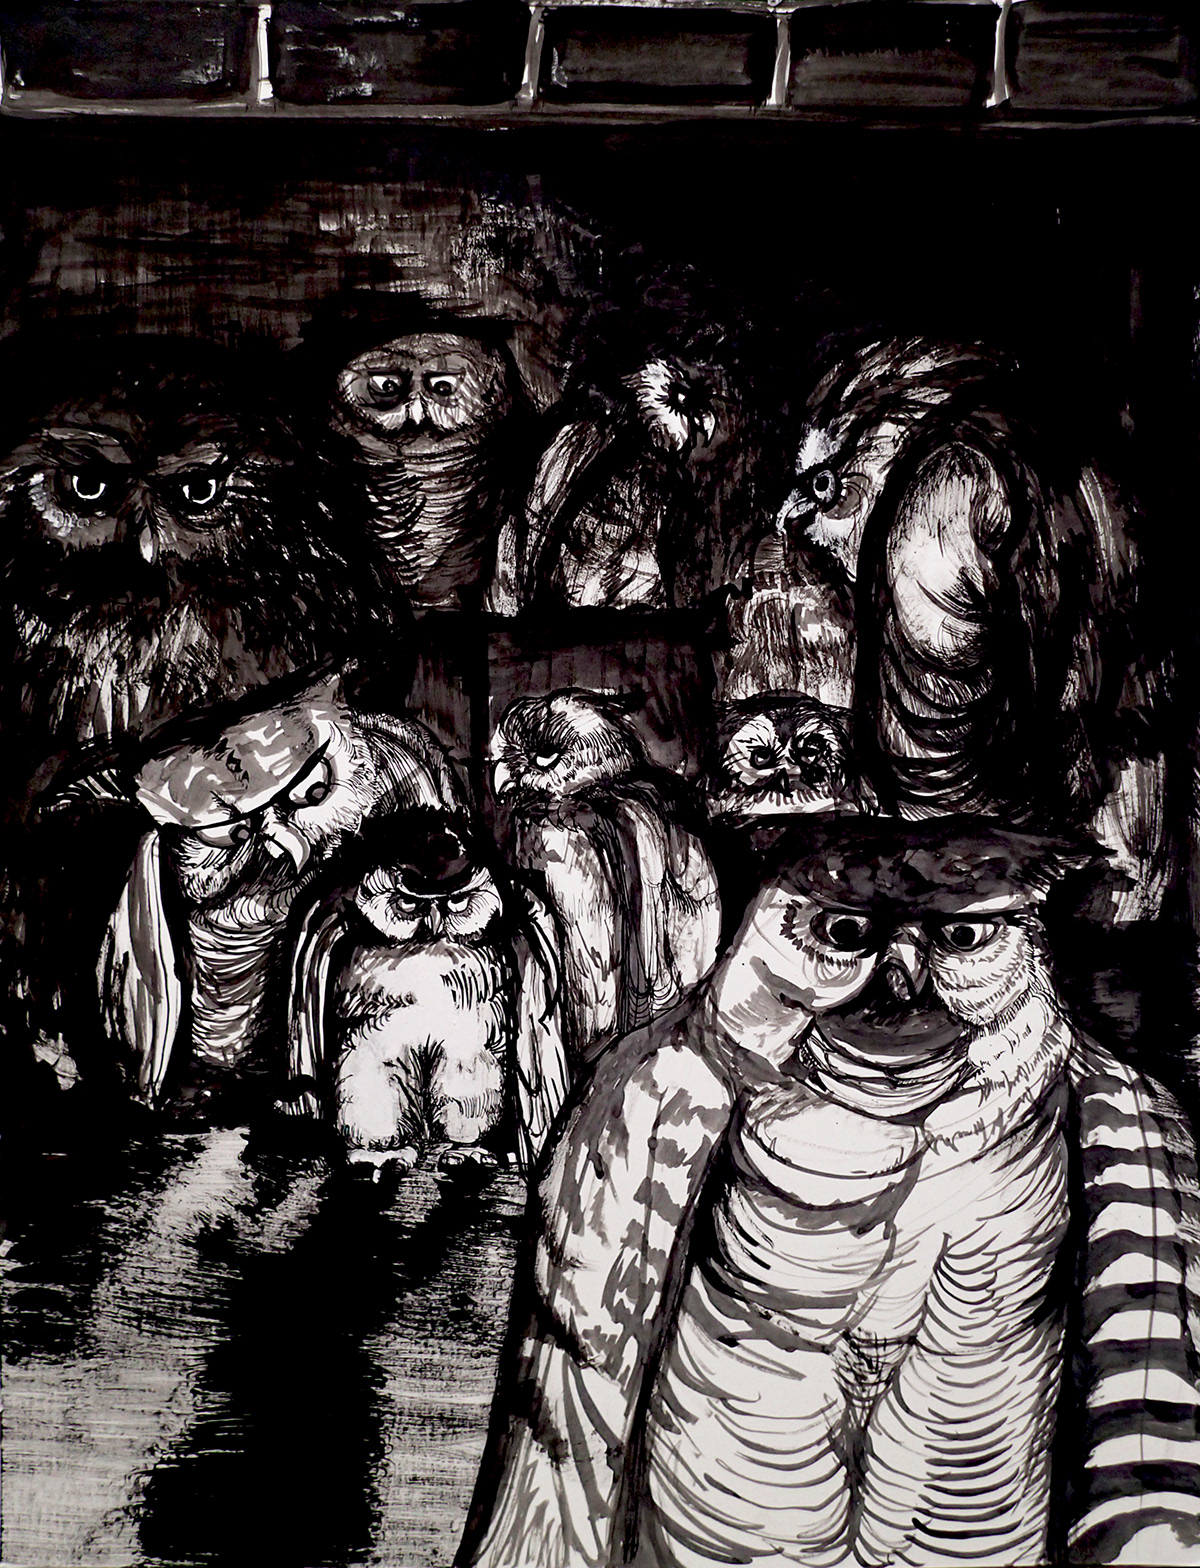 owl birds mafia mob gang narrative nior story storytelling   series ink drawing pen pen and ink animal